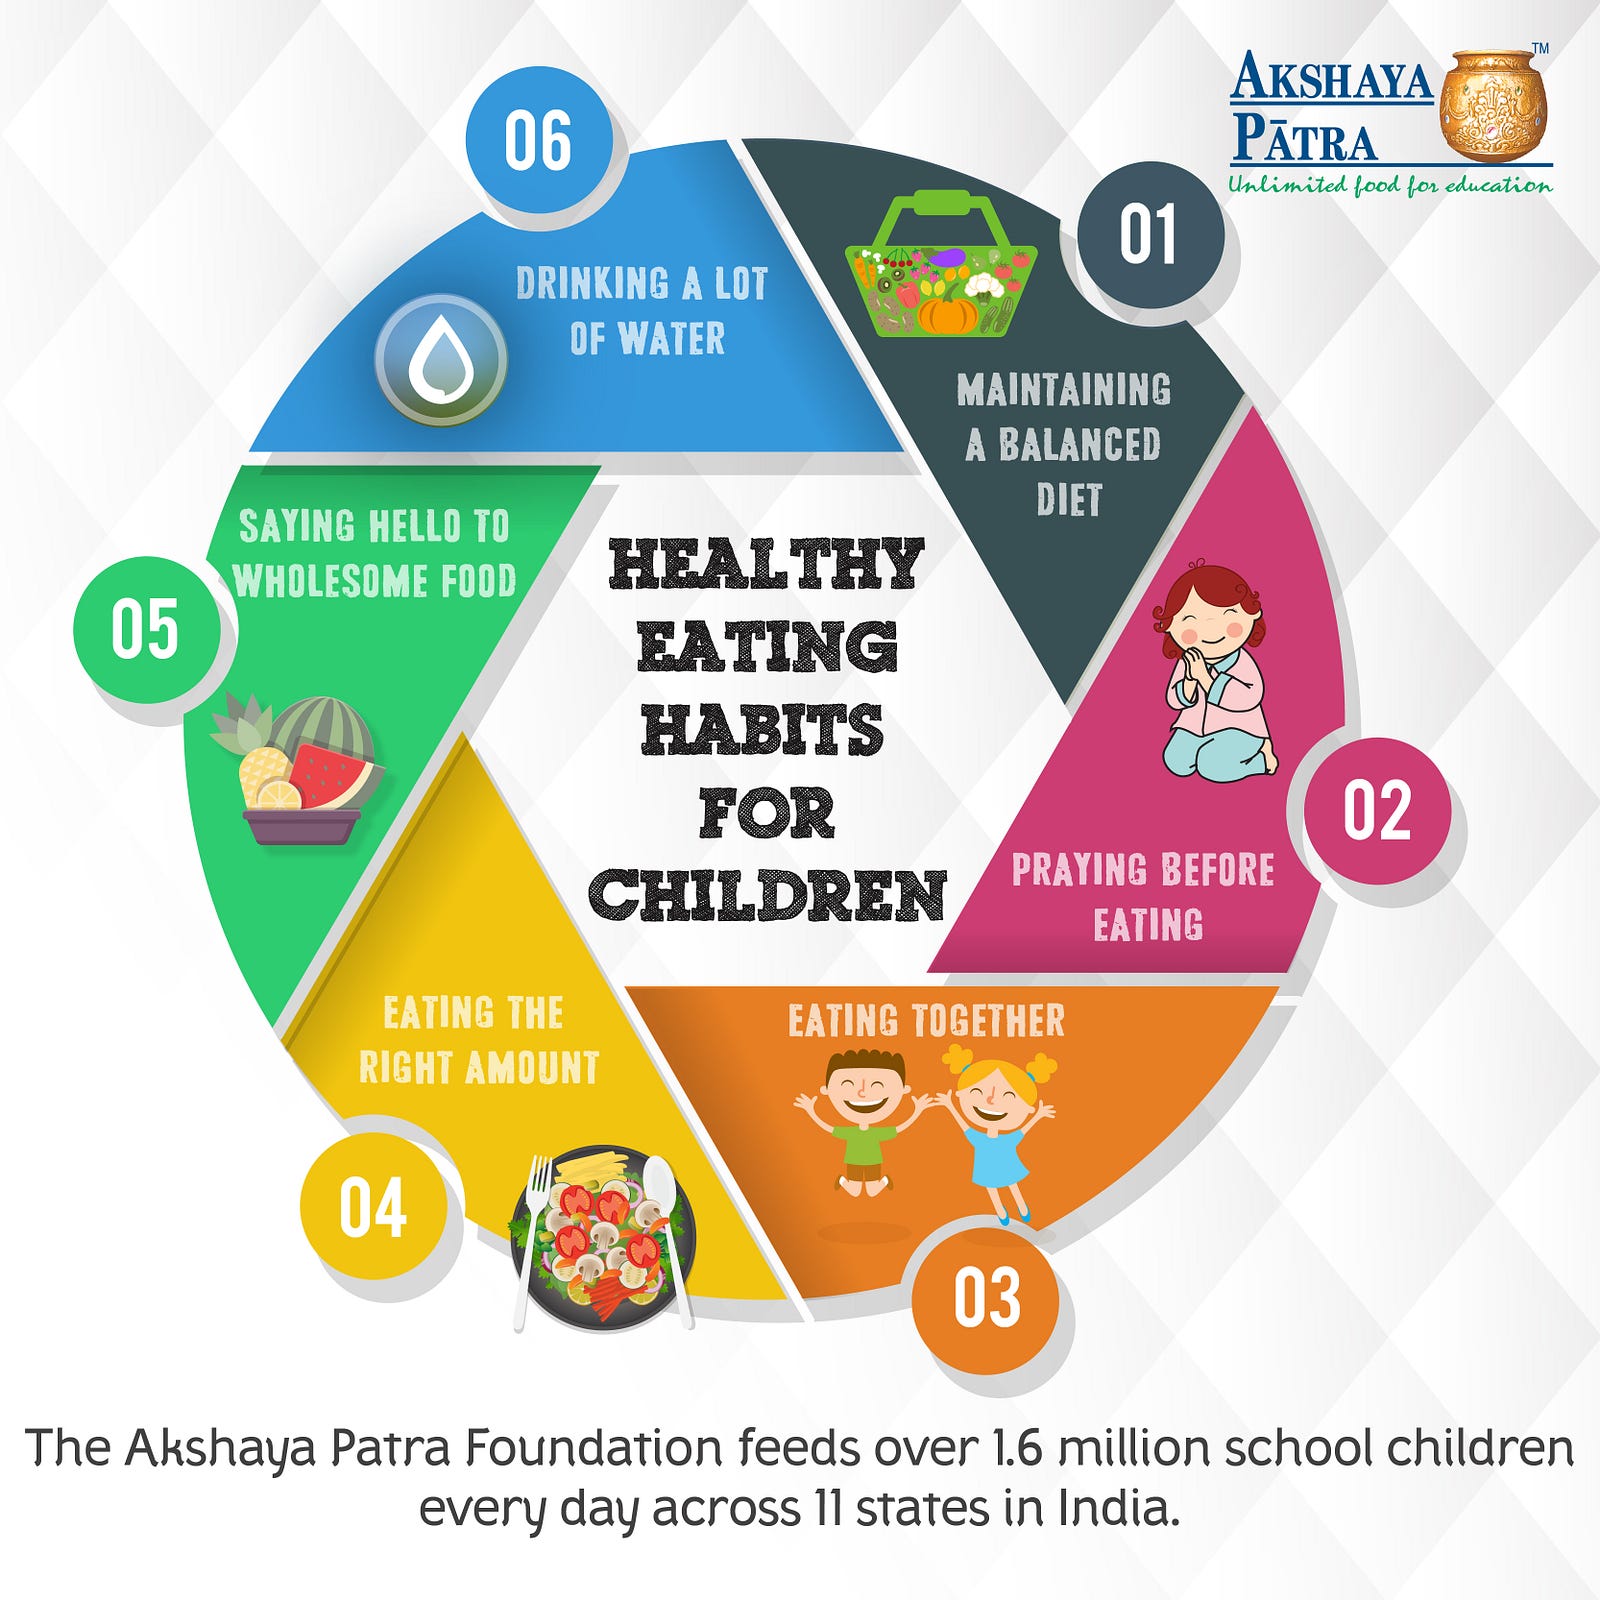 10 Healthy Eating Habits for Children by Akshaya Patra